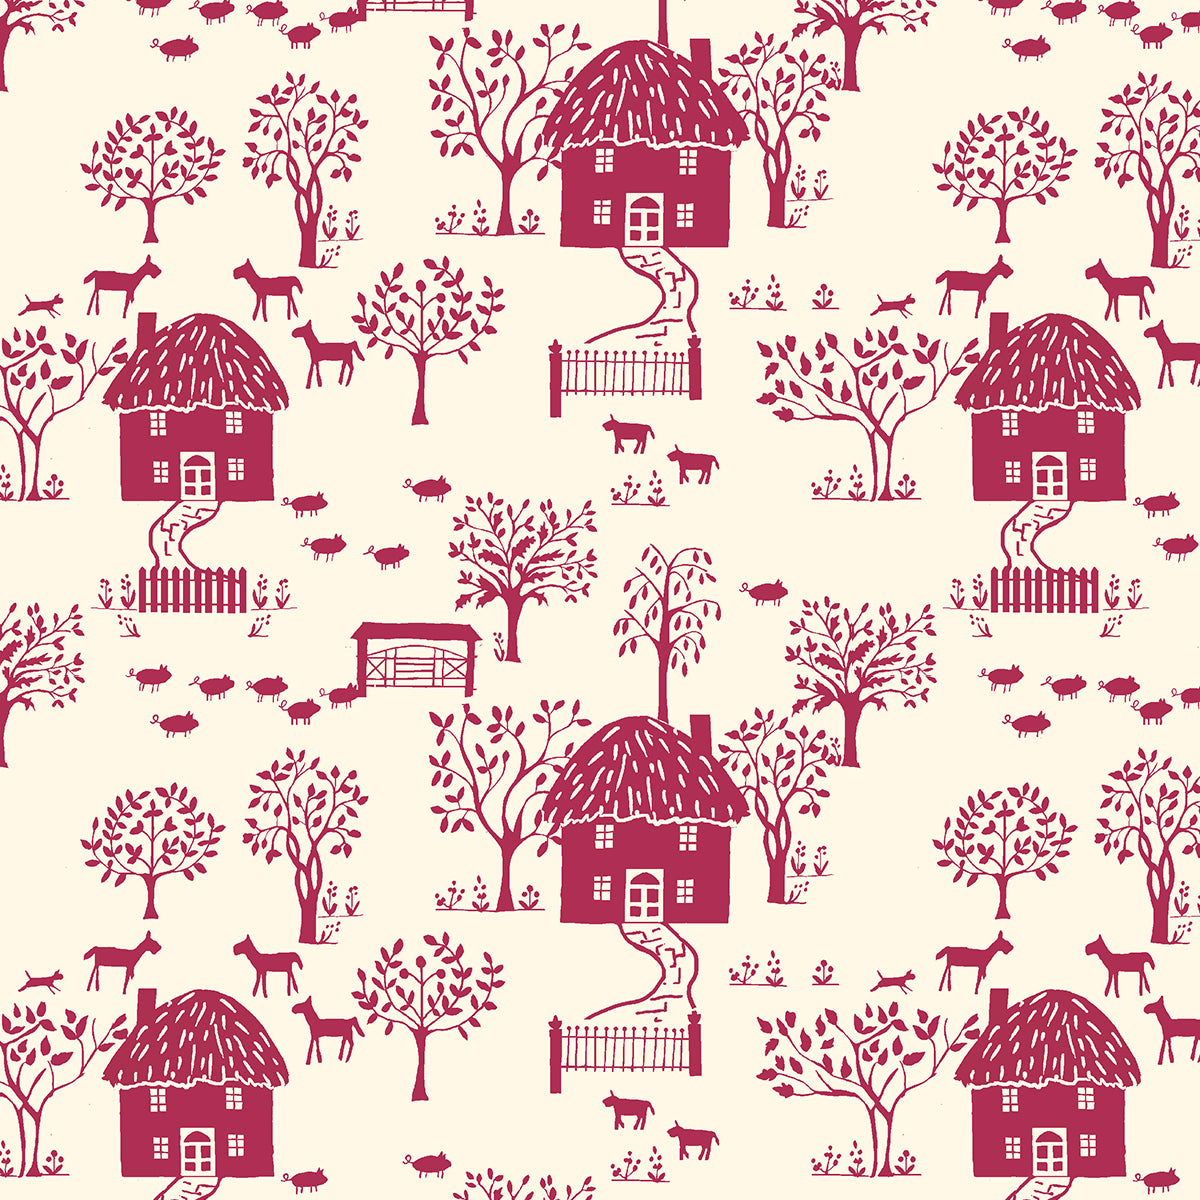 Cottage Lane Red by Liberty - The Cottage Garden - Rosie's Craft Shop Ltd